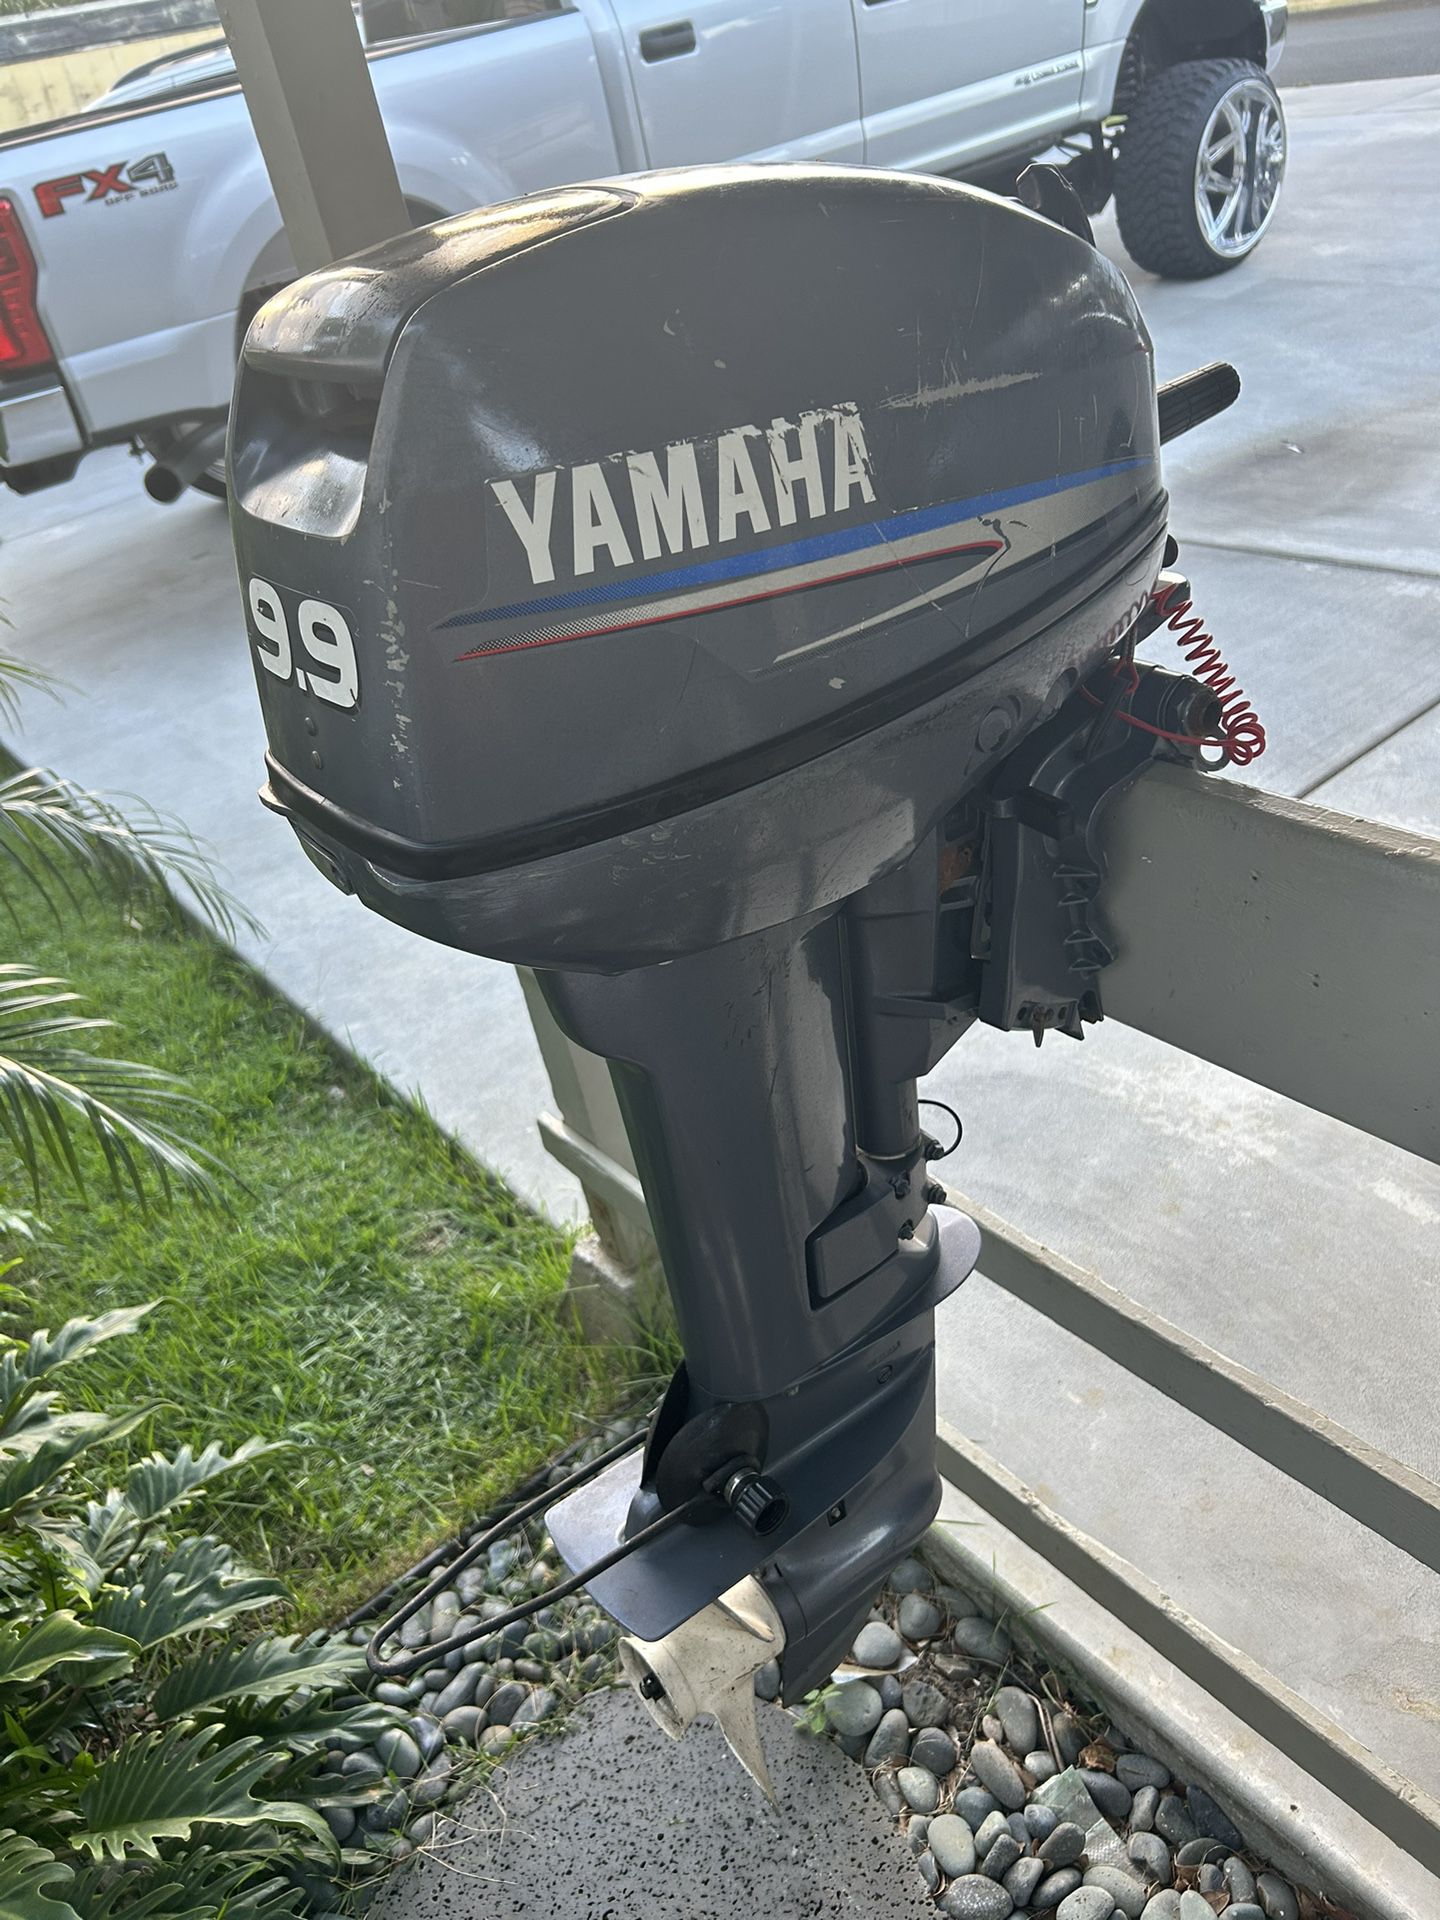 9.9 Yamaha Outboard